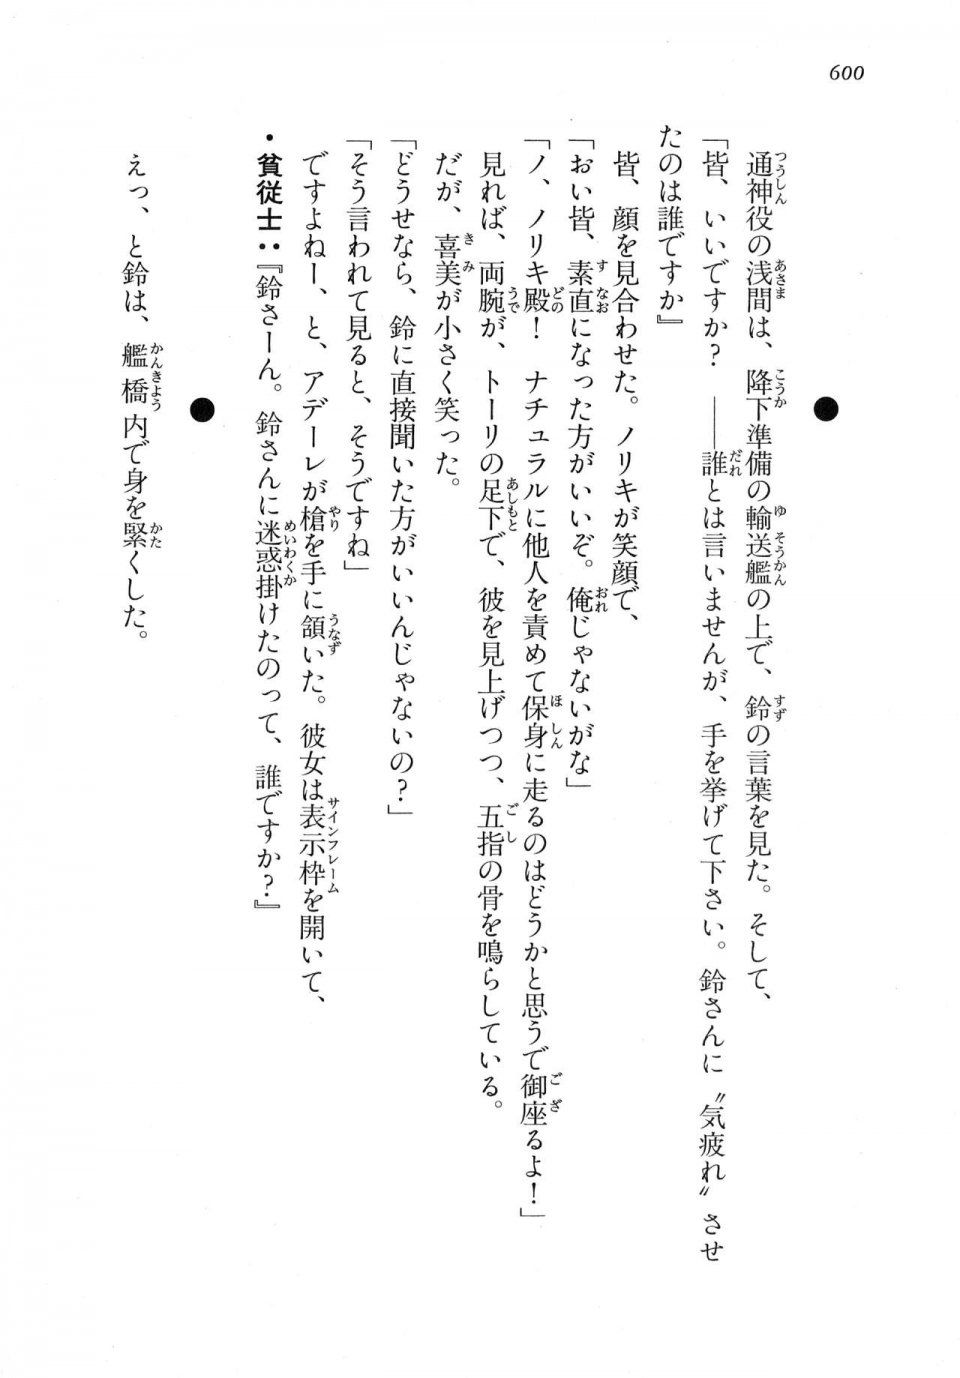 Kyoukai Senjou no Horizon LN Vol 18(7C) Part 2 - Photo #40